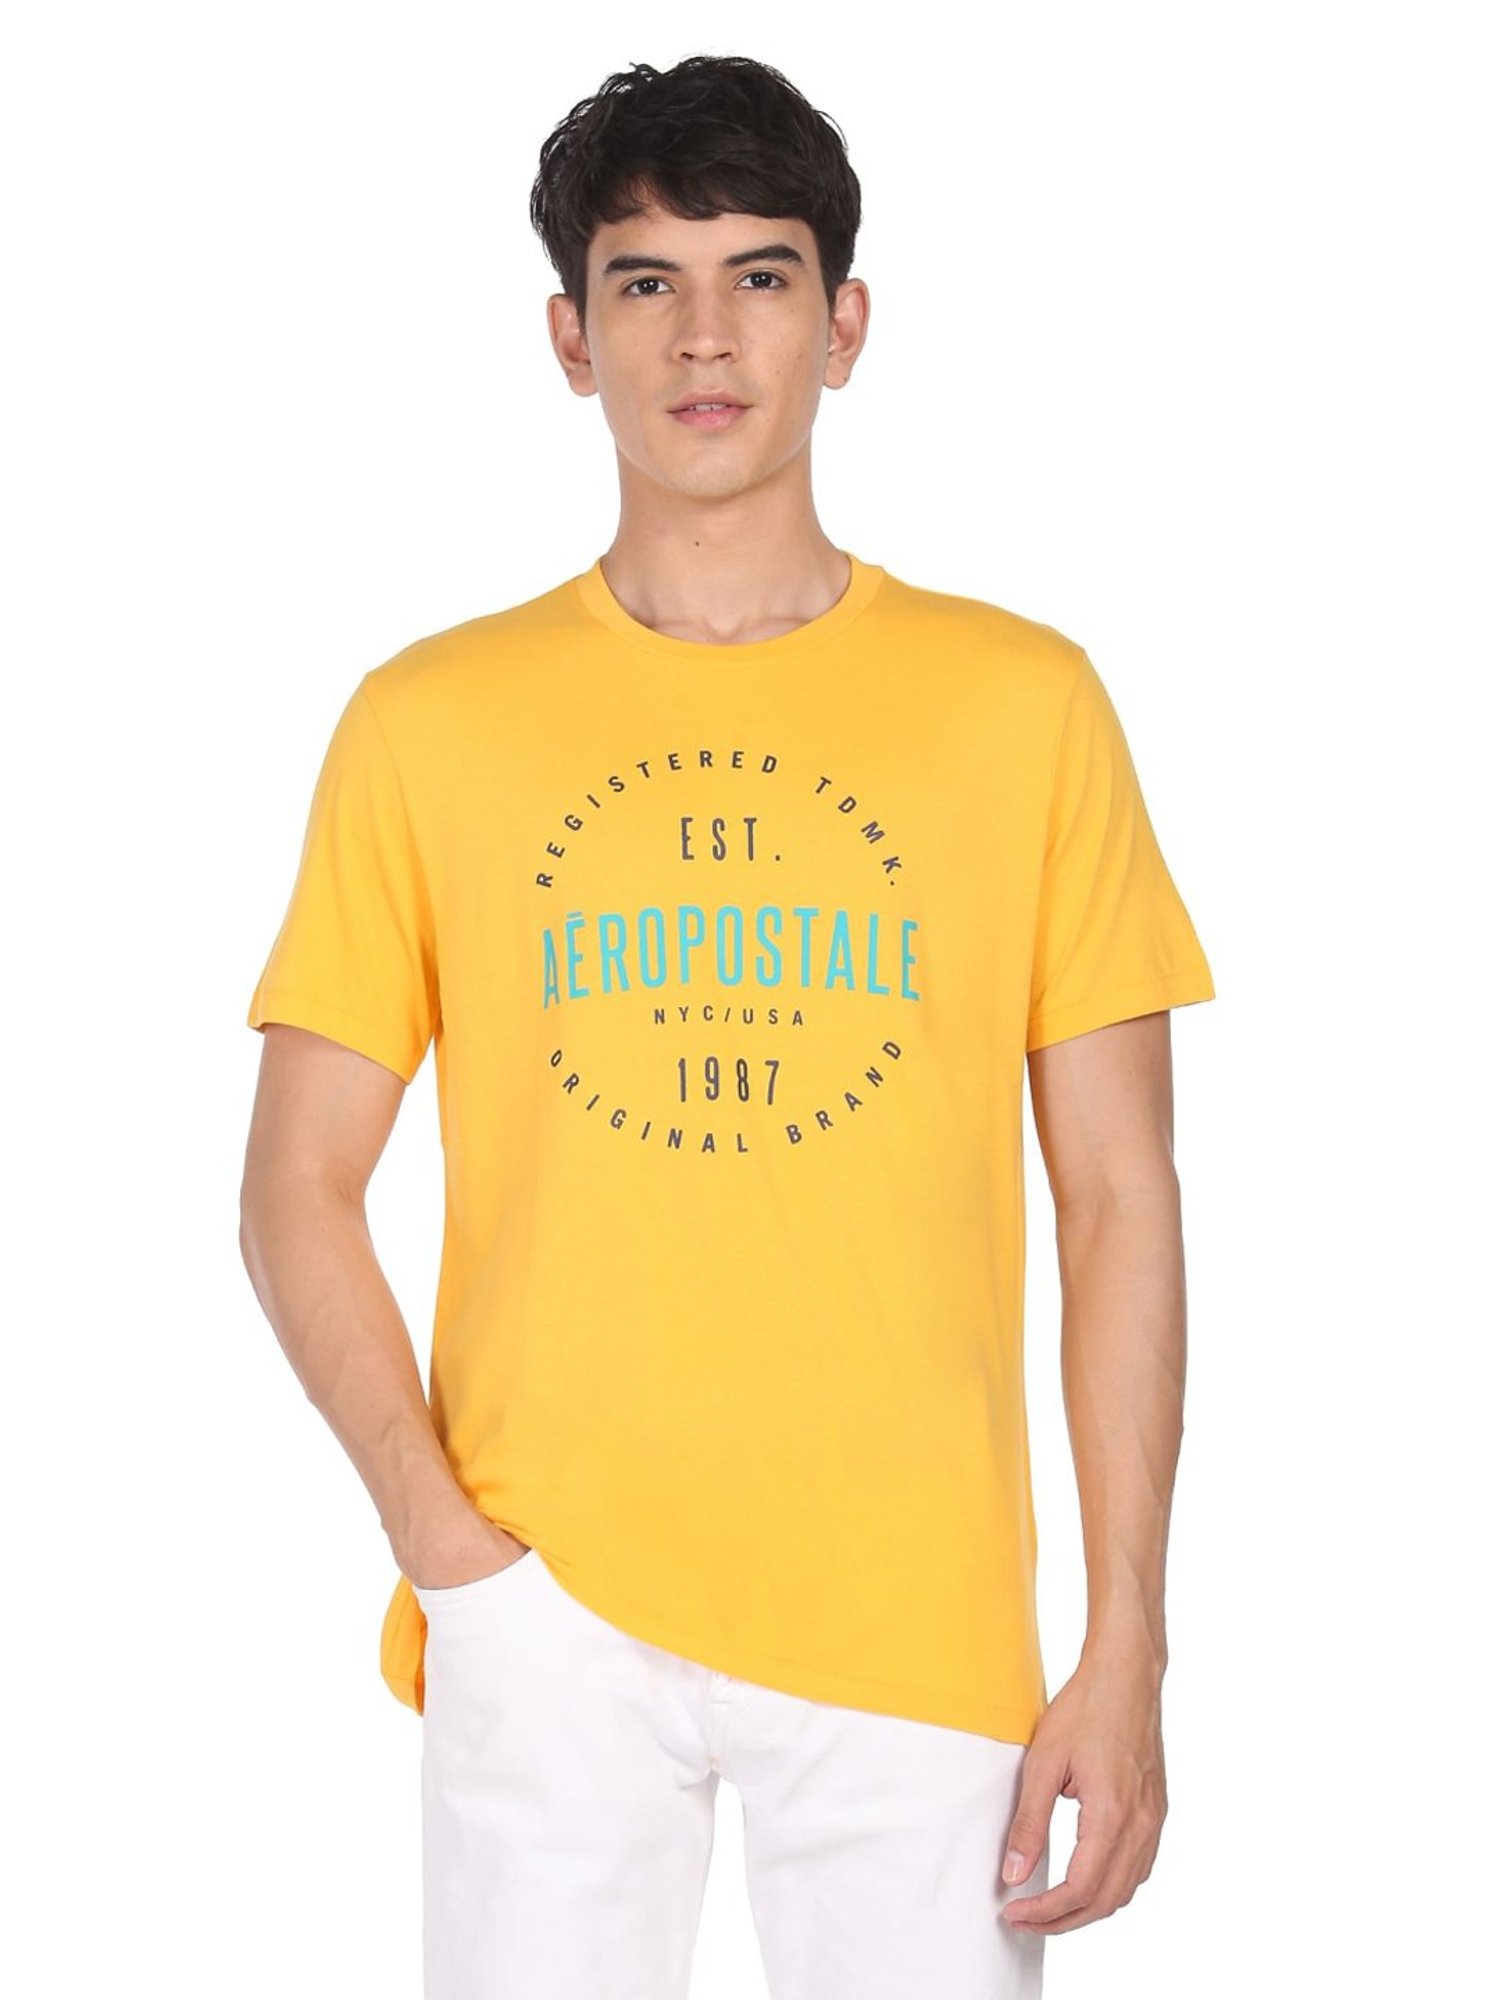 Aeropostale Front-Logo Round-Neck Gradient T-Shirt for Men - Blue